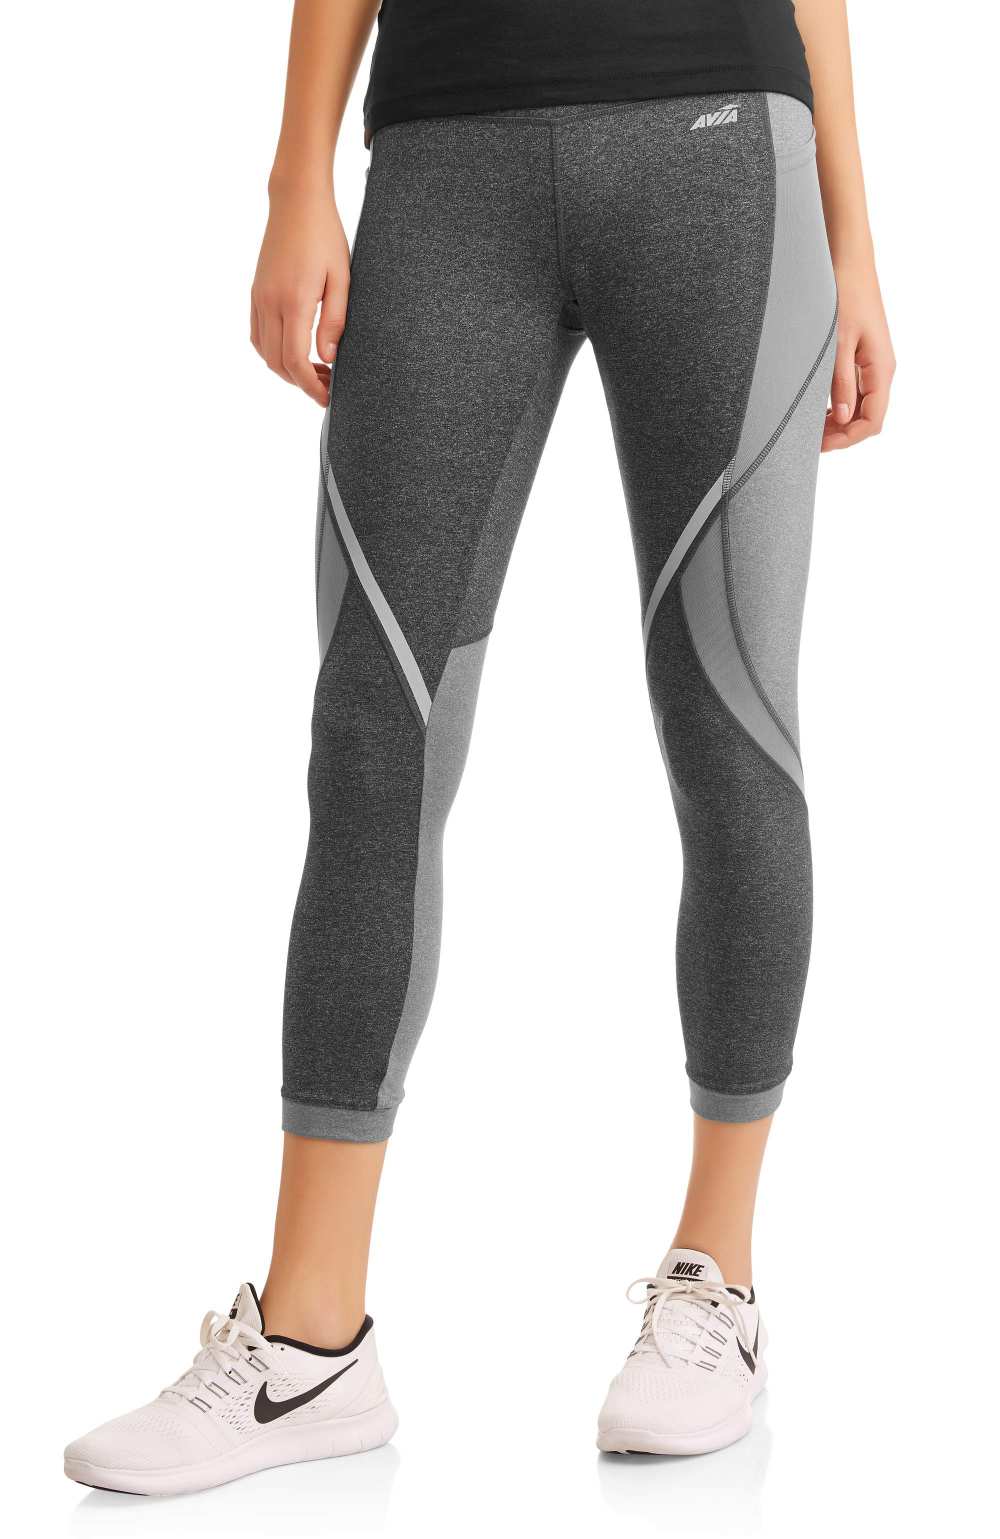 Avia large womens leggings athletic wear cropped mesh detail